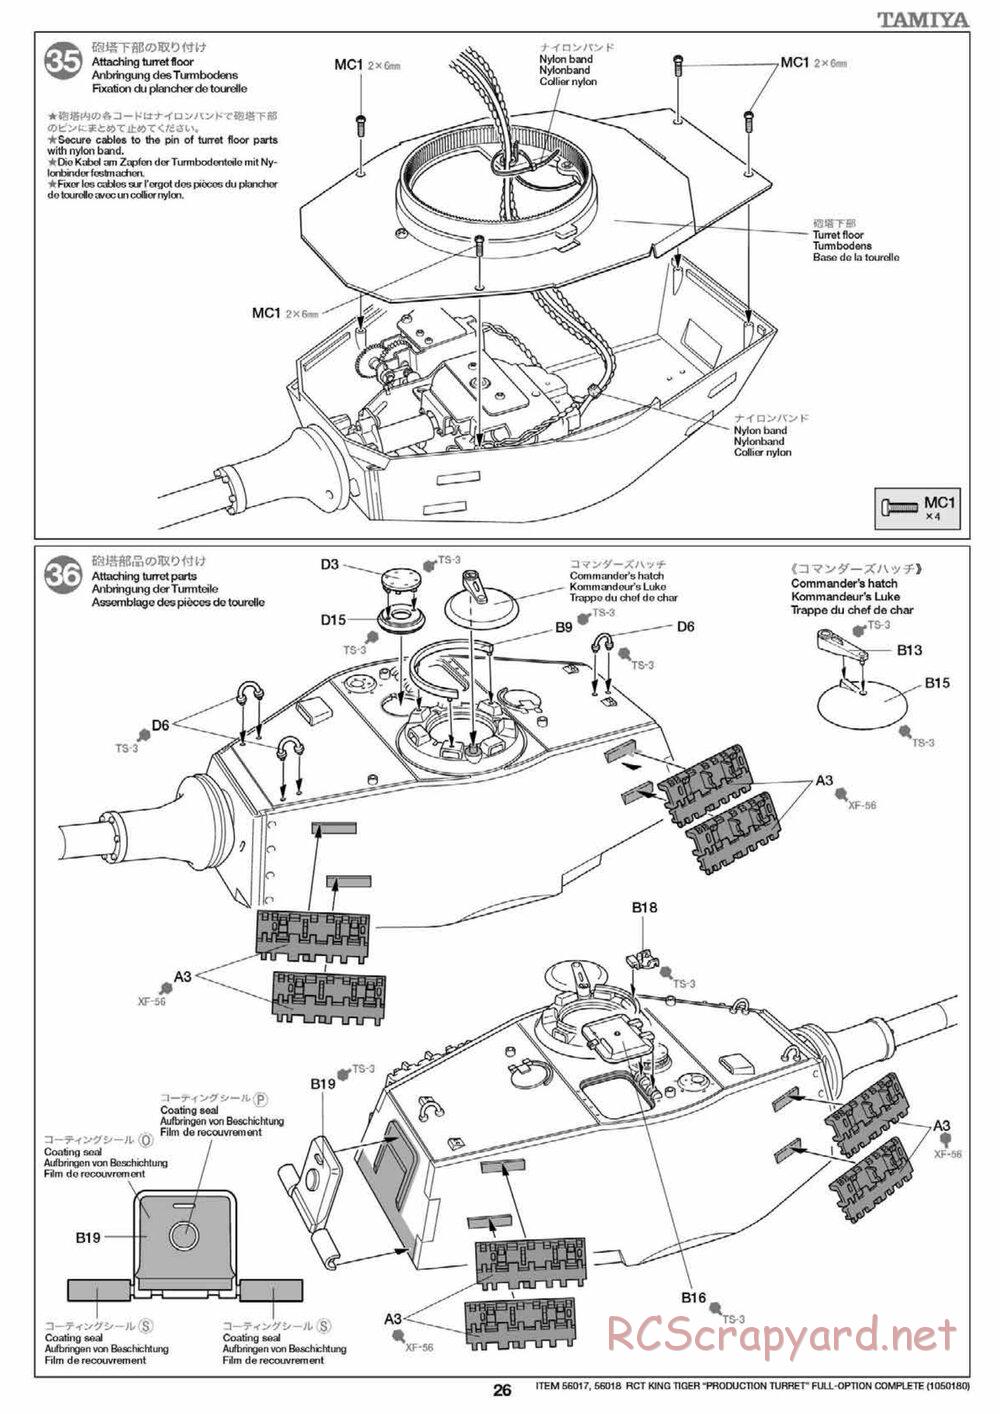 Tamiya - King Tiger - 1/16 Scale Chassis - Manual - Page 26